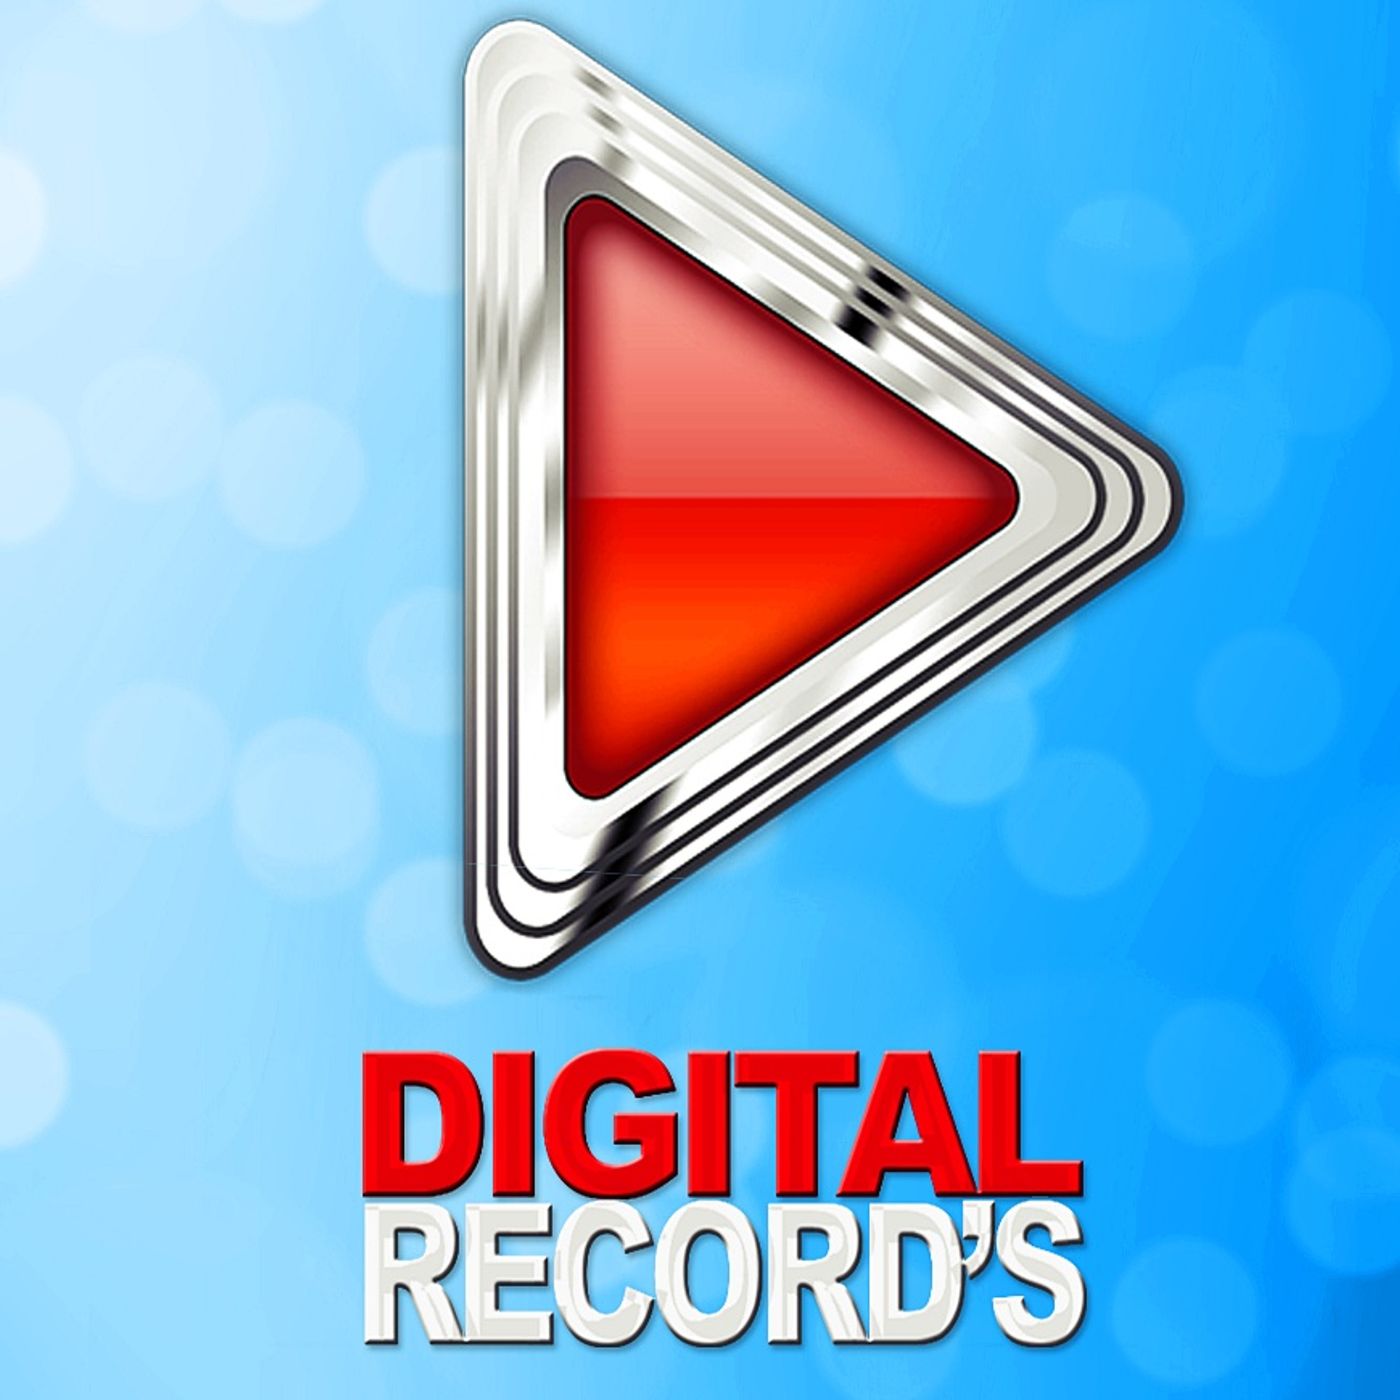 Digital Record's